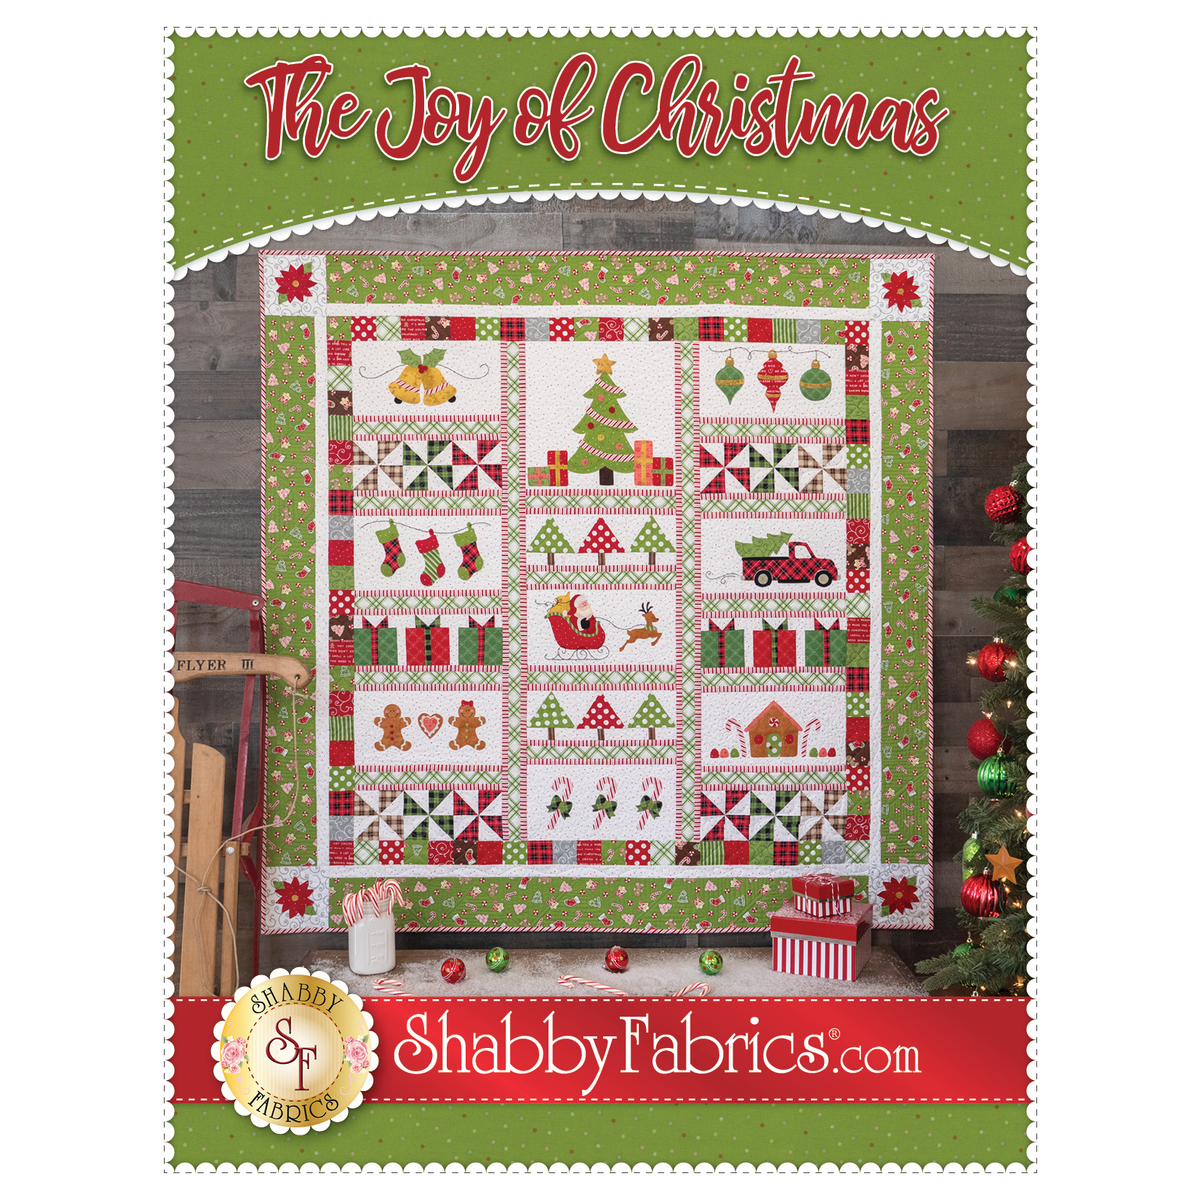 Starflower Christmas Joy To The World Reversible Quilt Pattern by Create  Joy Project - Moda Fabrics